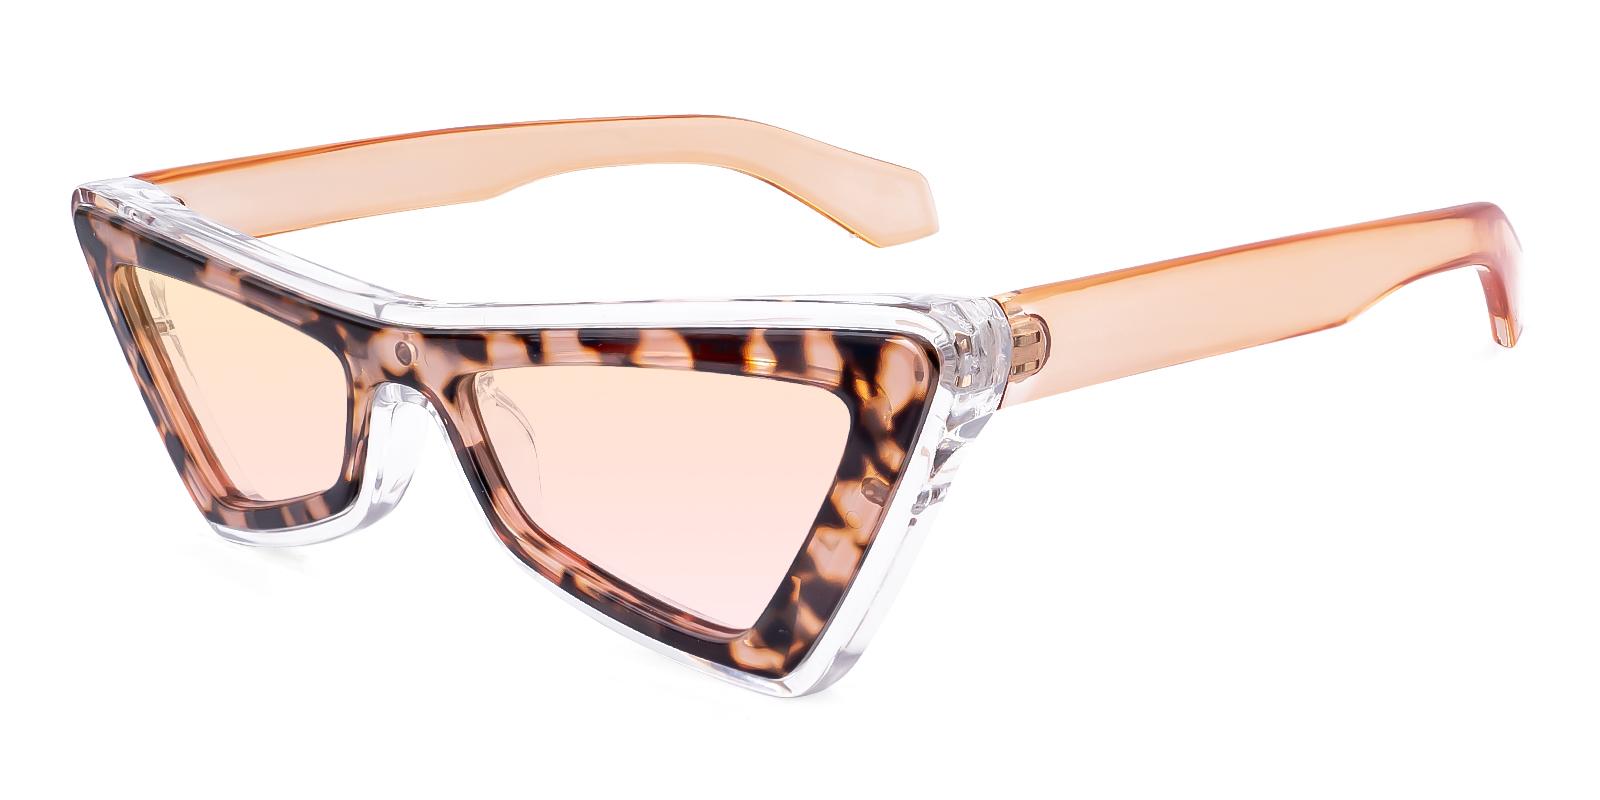 Cadeous Tortoise Acetate Sunglasses , UniversalBridgeFit Frames from ABBE Glasses